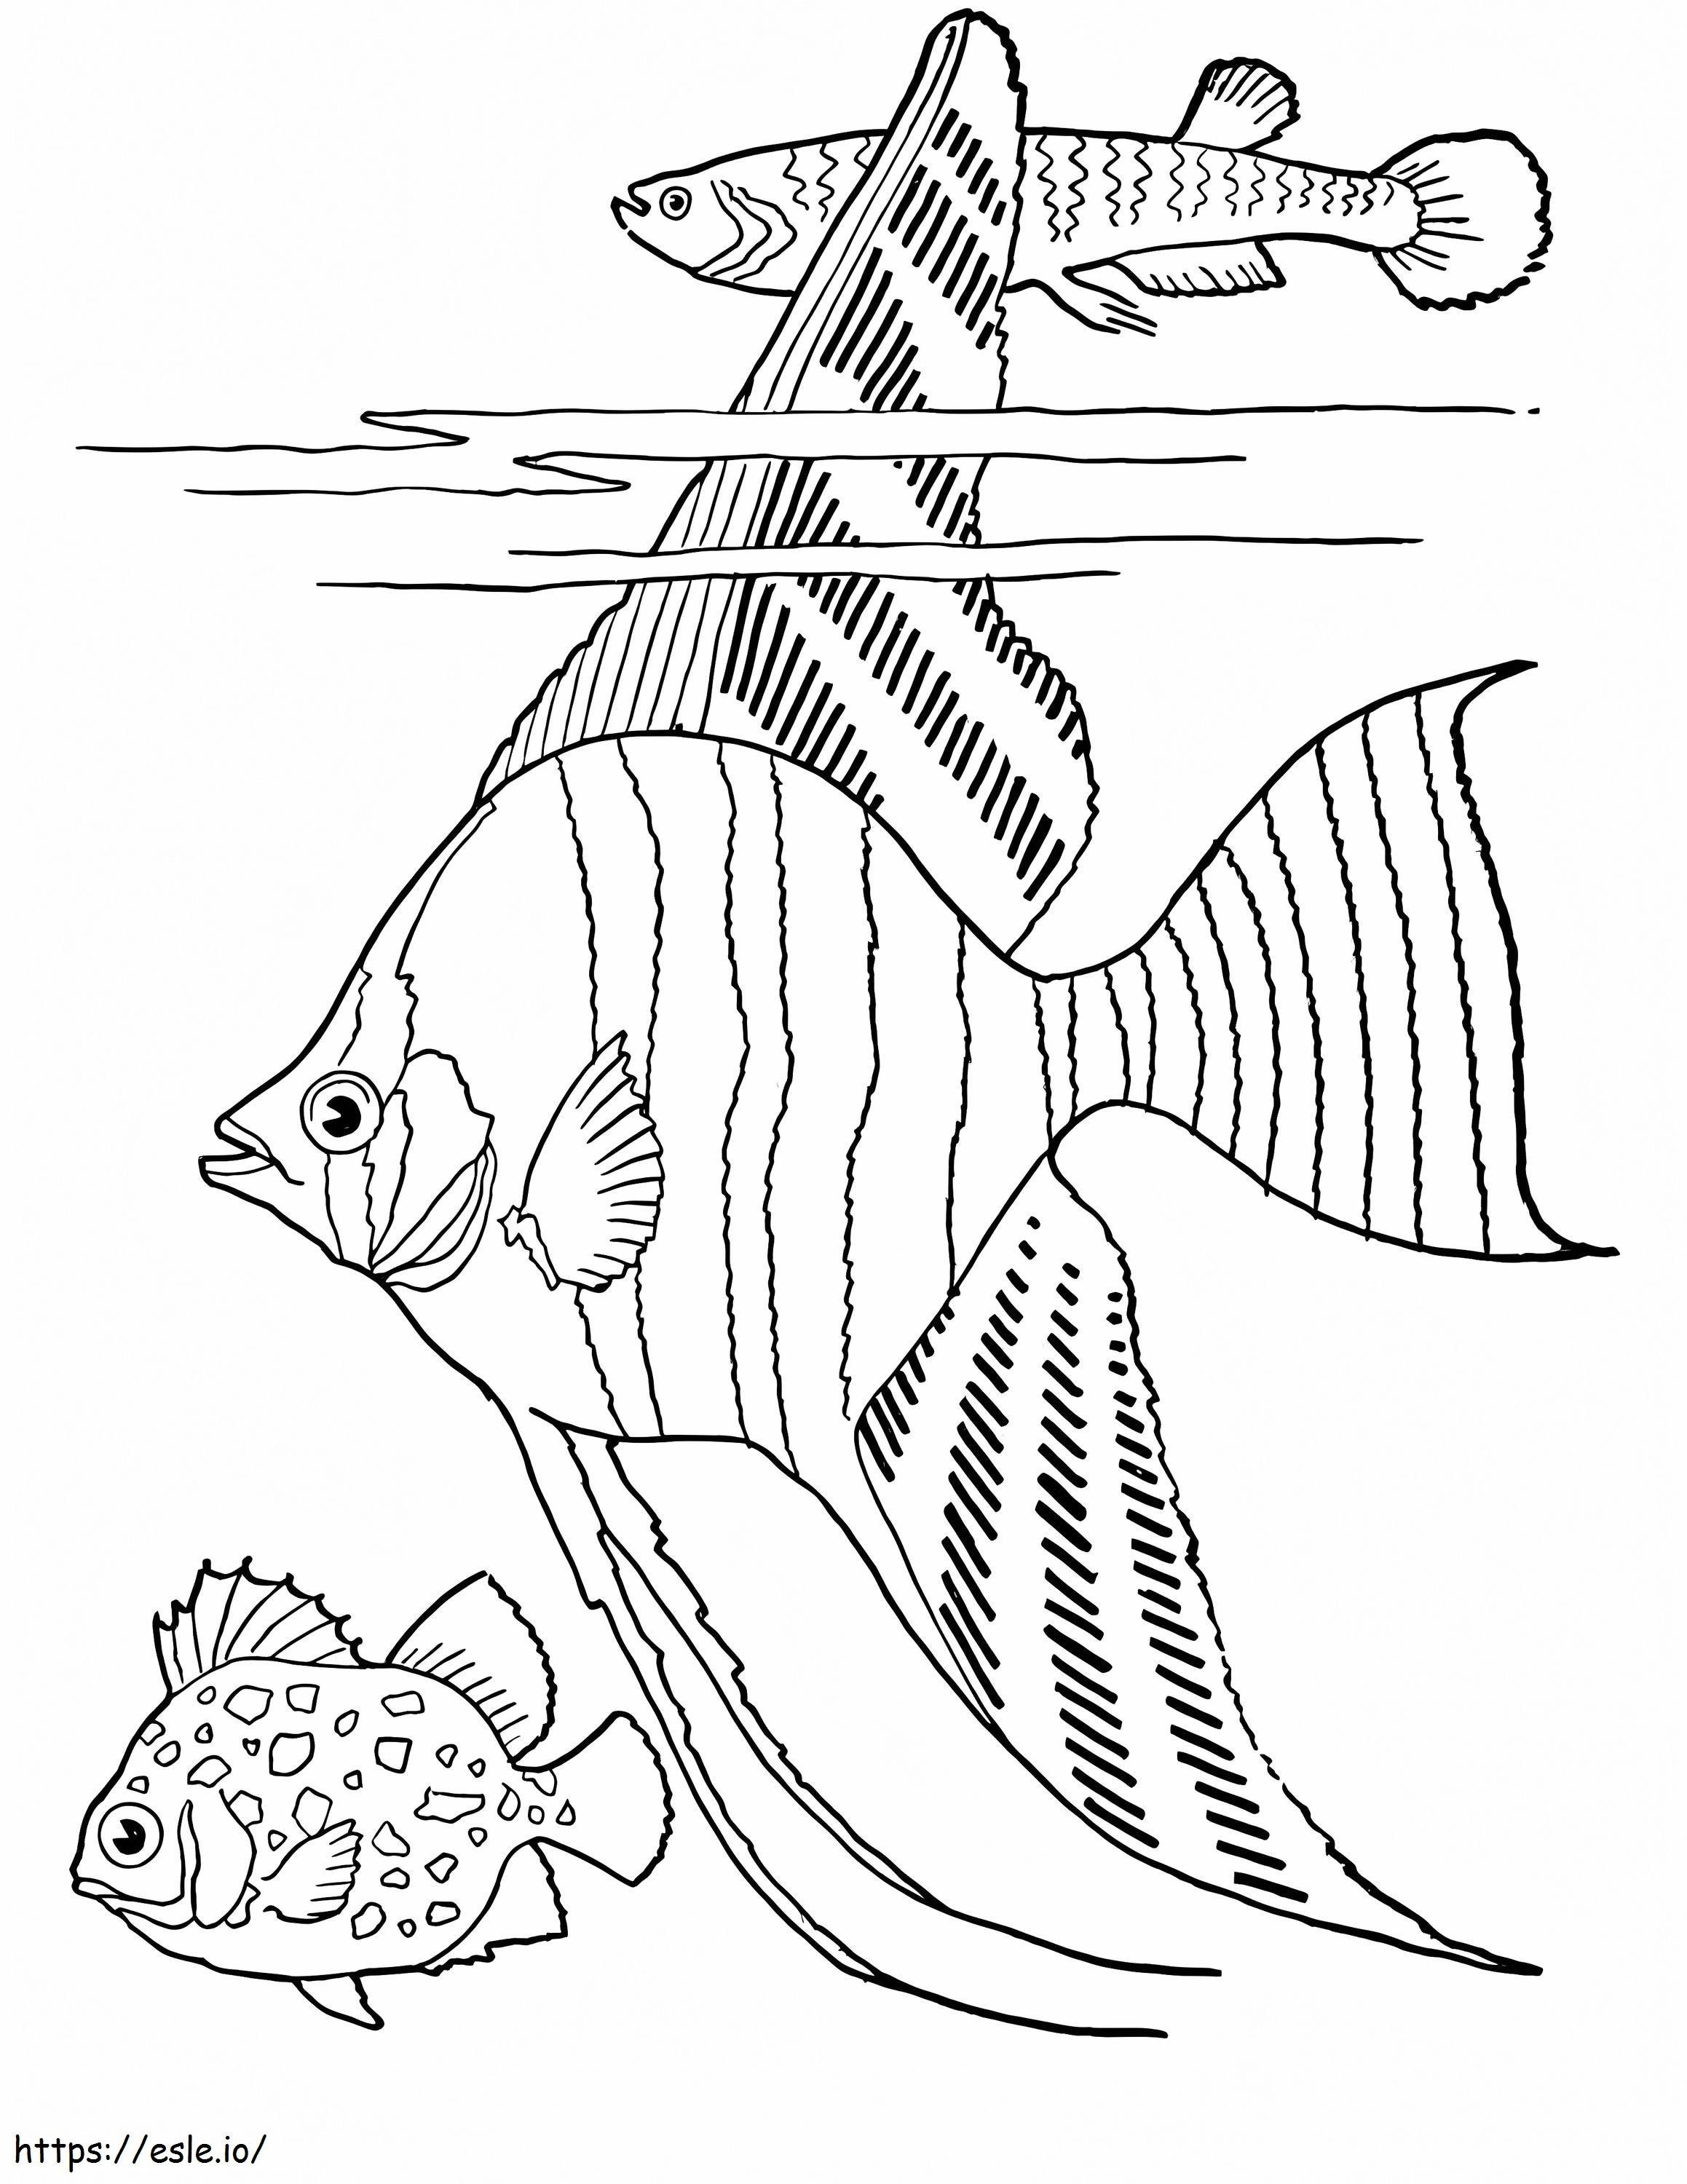 Three Normal Fish coloring page